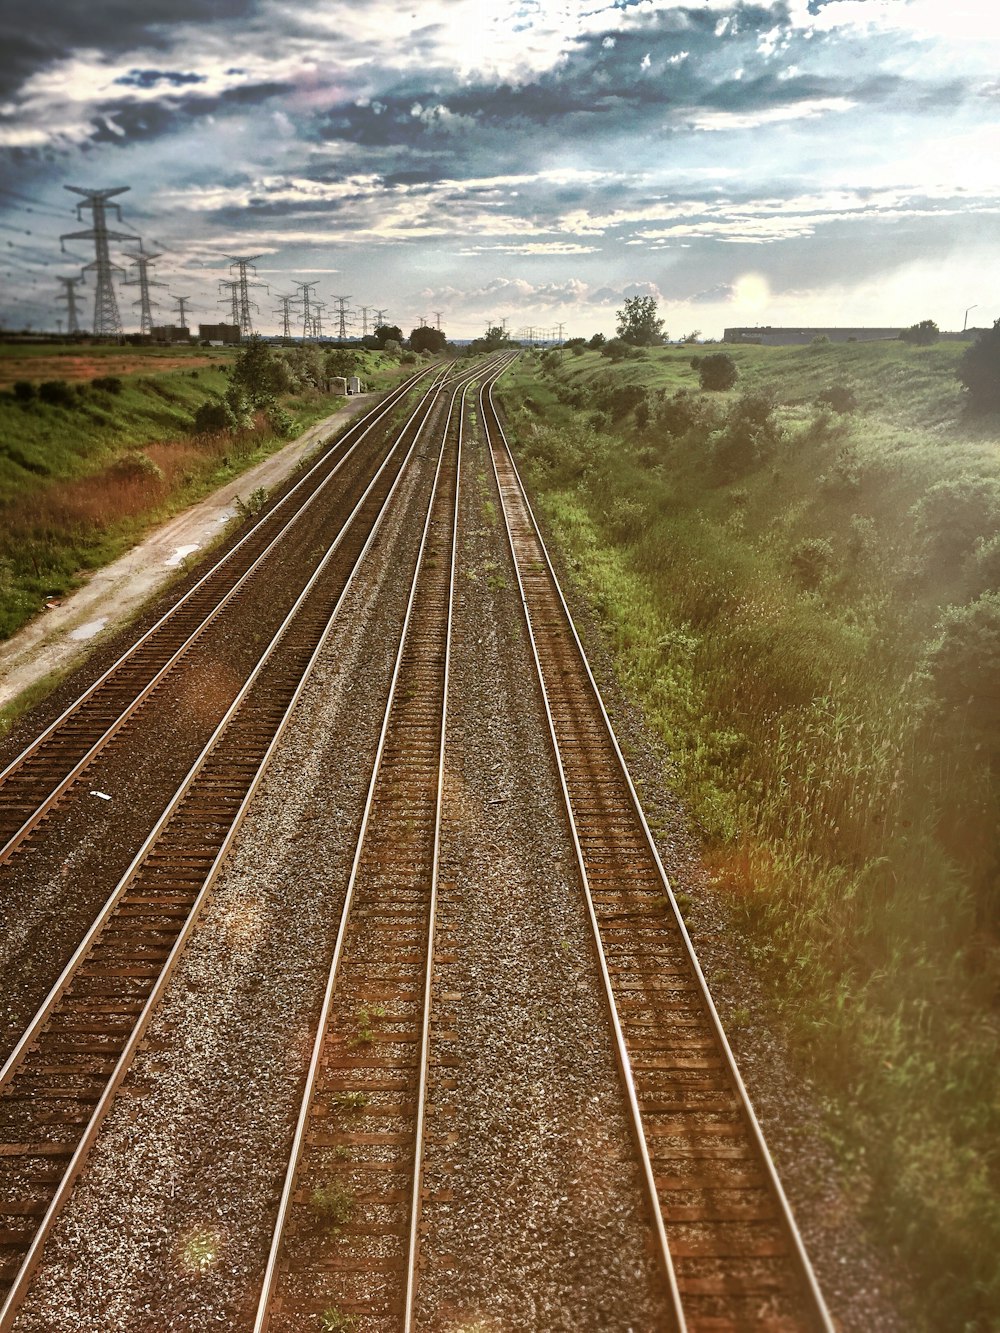 a train track running through a lush green countryside